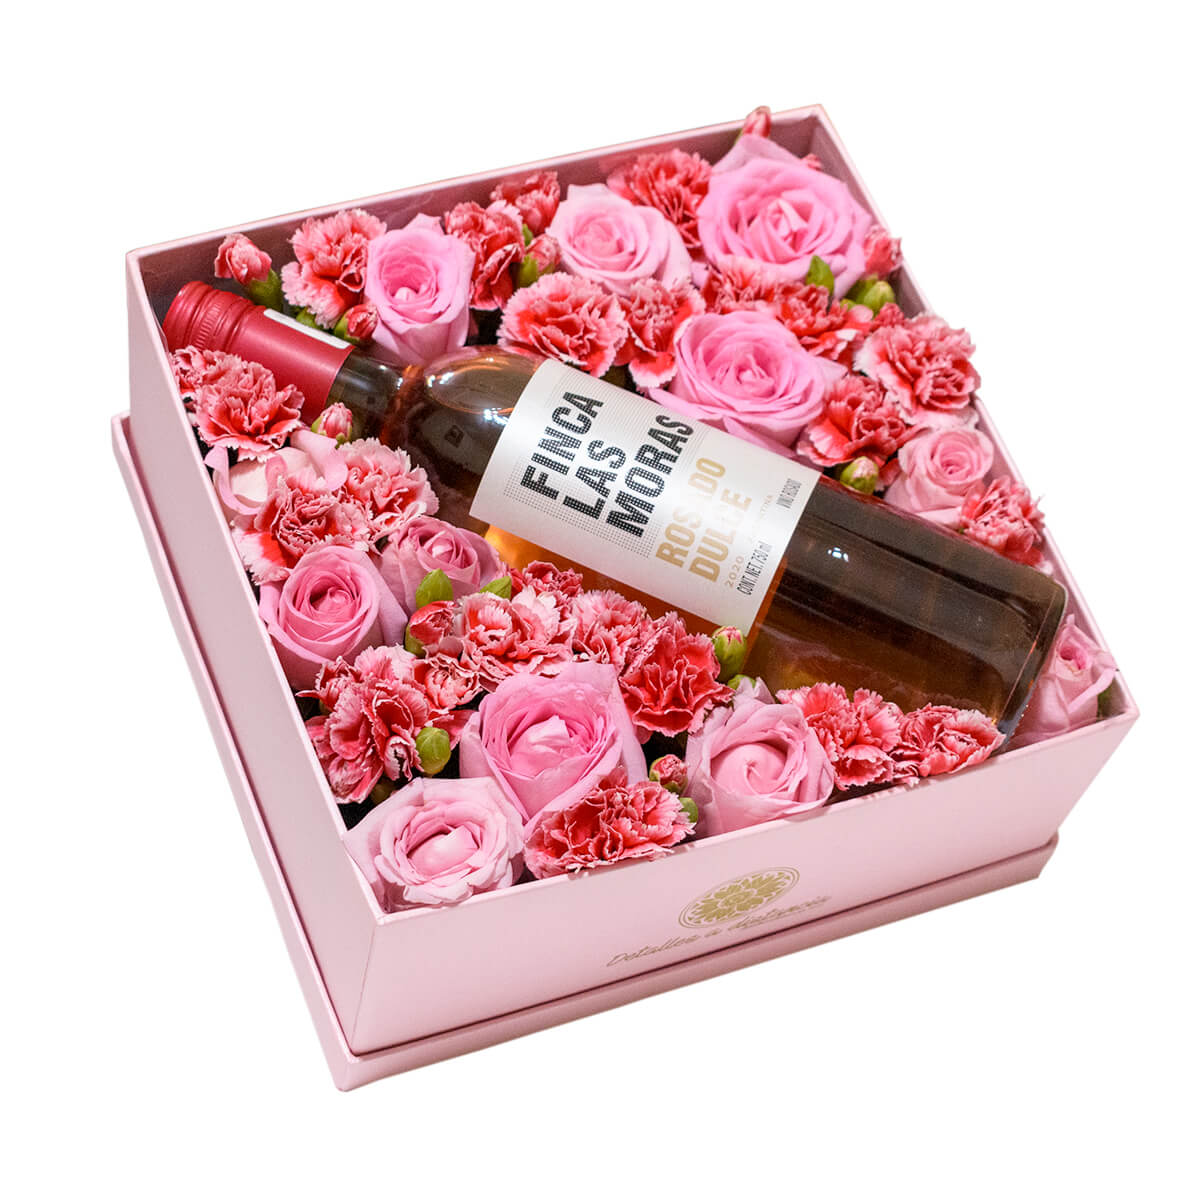 Caja de flores con vino - Detalles a distancia | Envía flores y vino